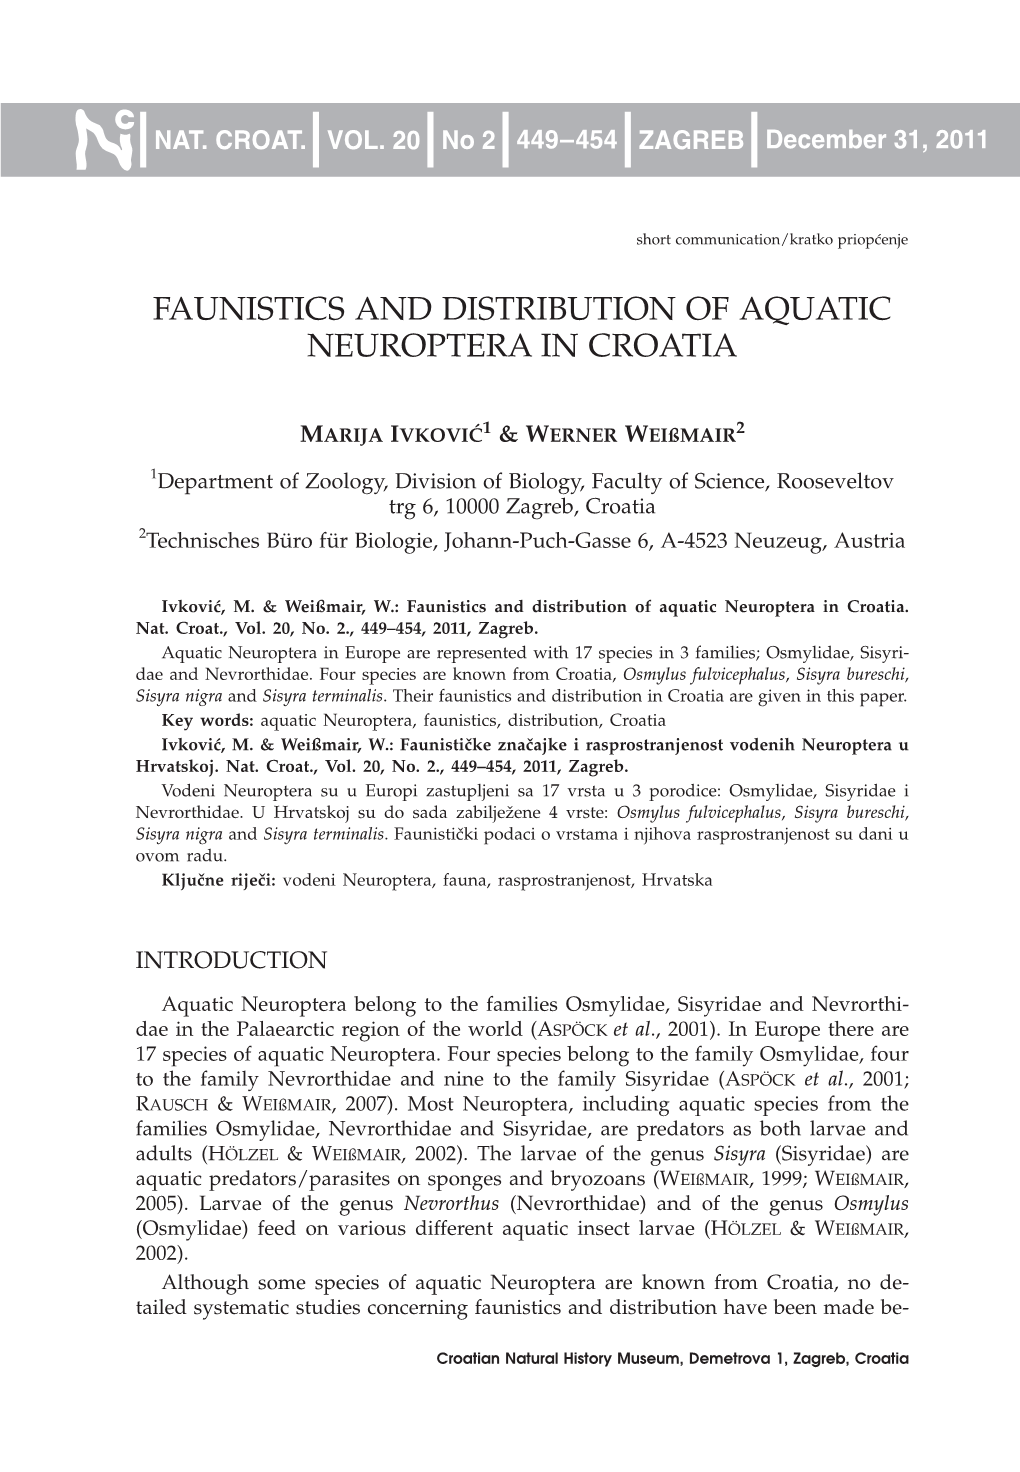 Faunistics and Distribution of Aquatic Neuroptera in Croatia